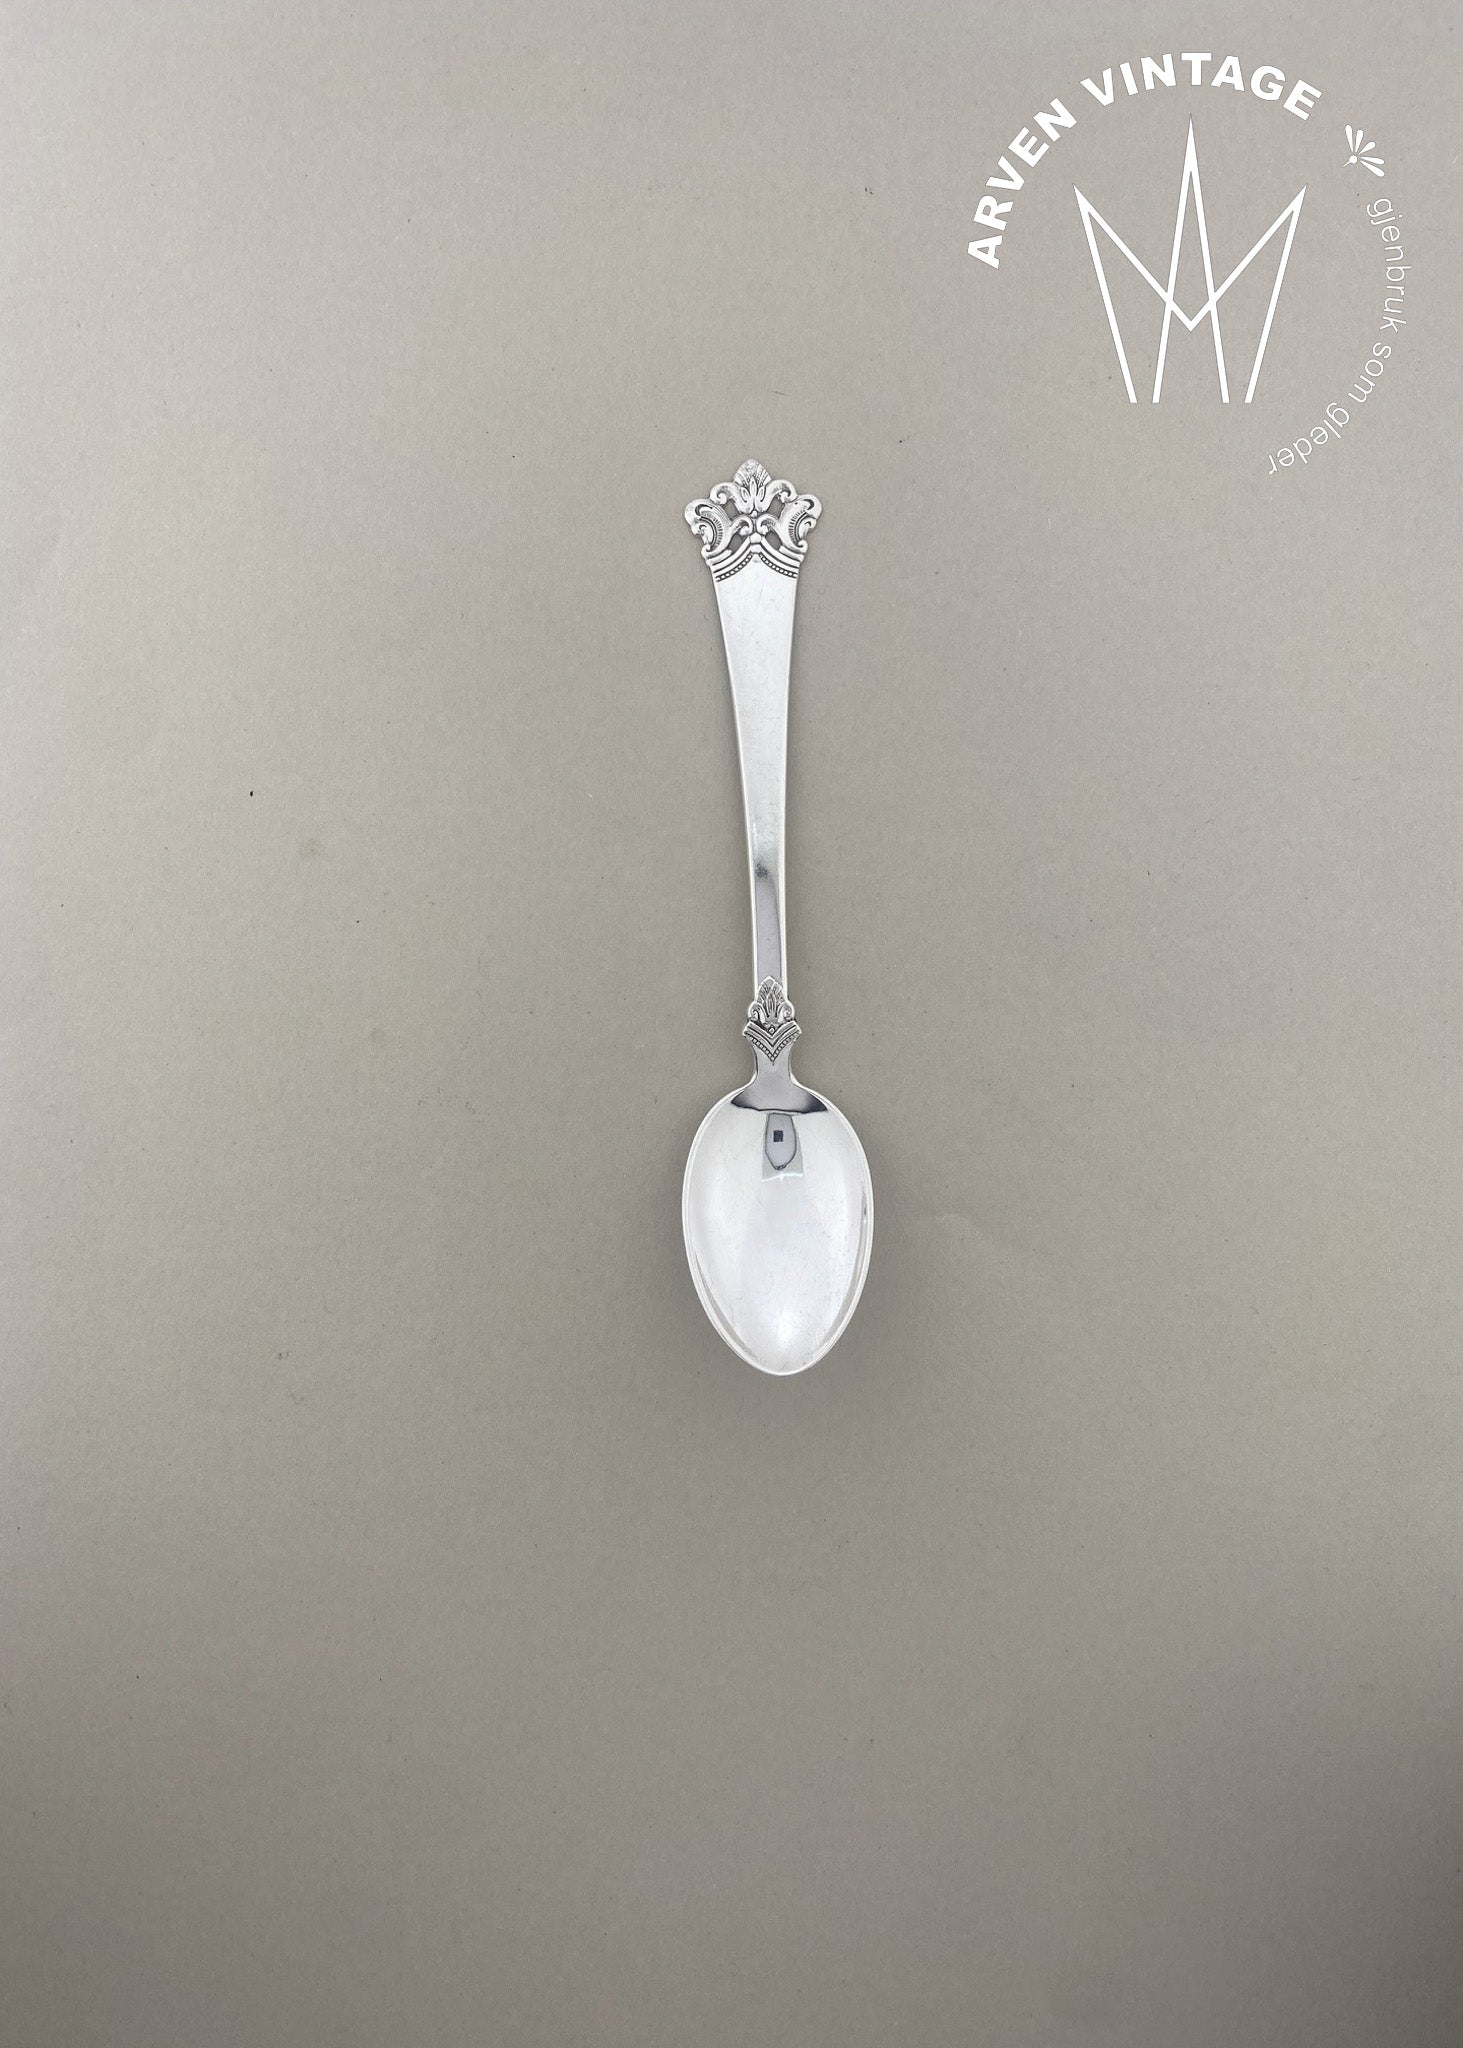 Vintage Anitra coffee spoon